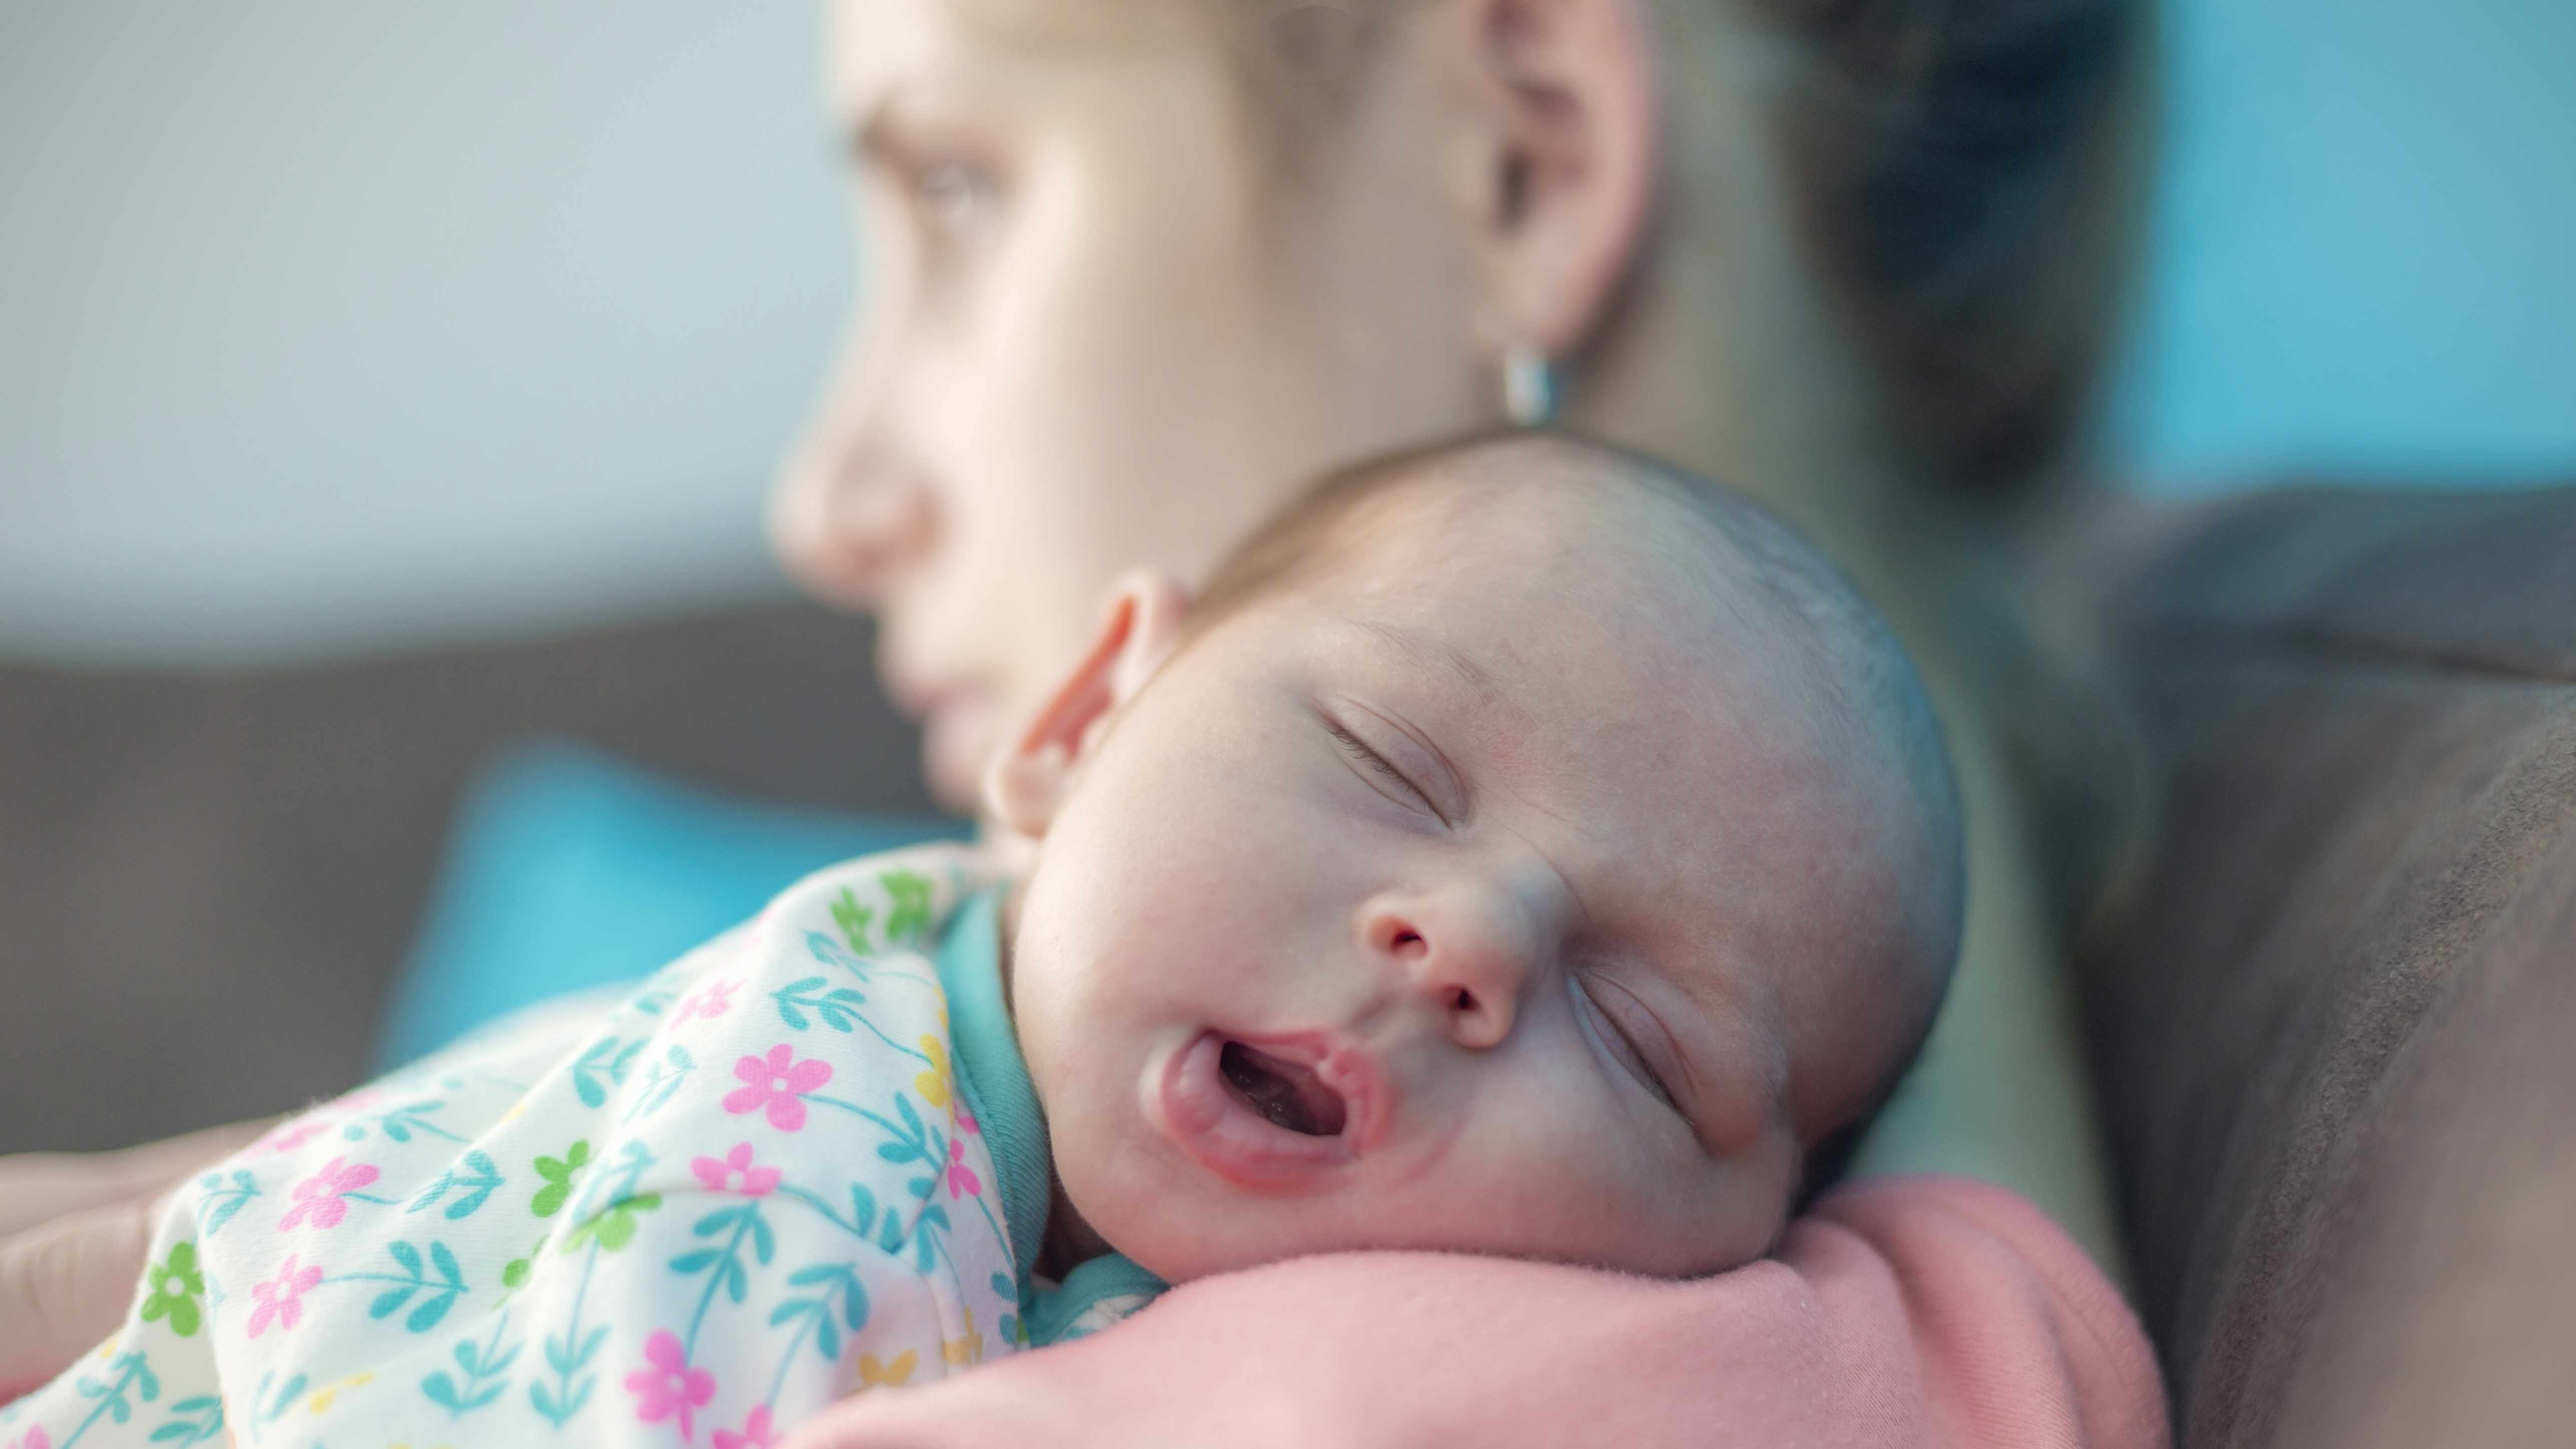 mother holding sleeping baby on shoulder, perhaps representing postpartum depression